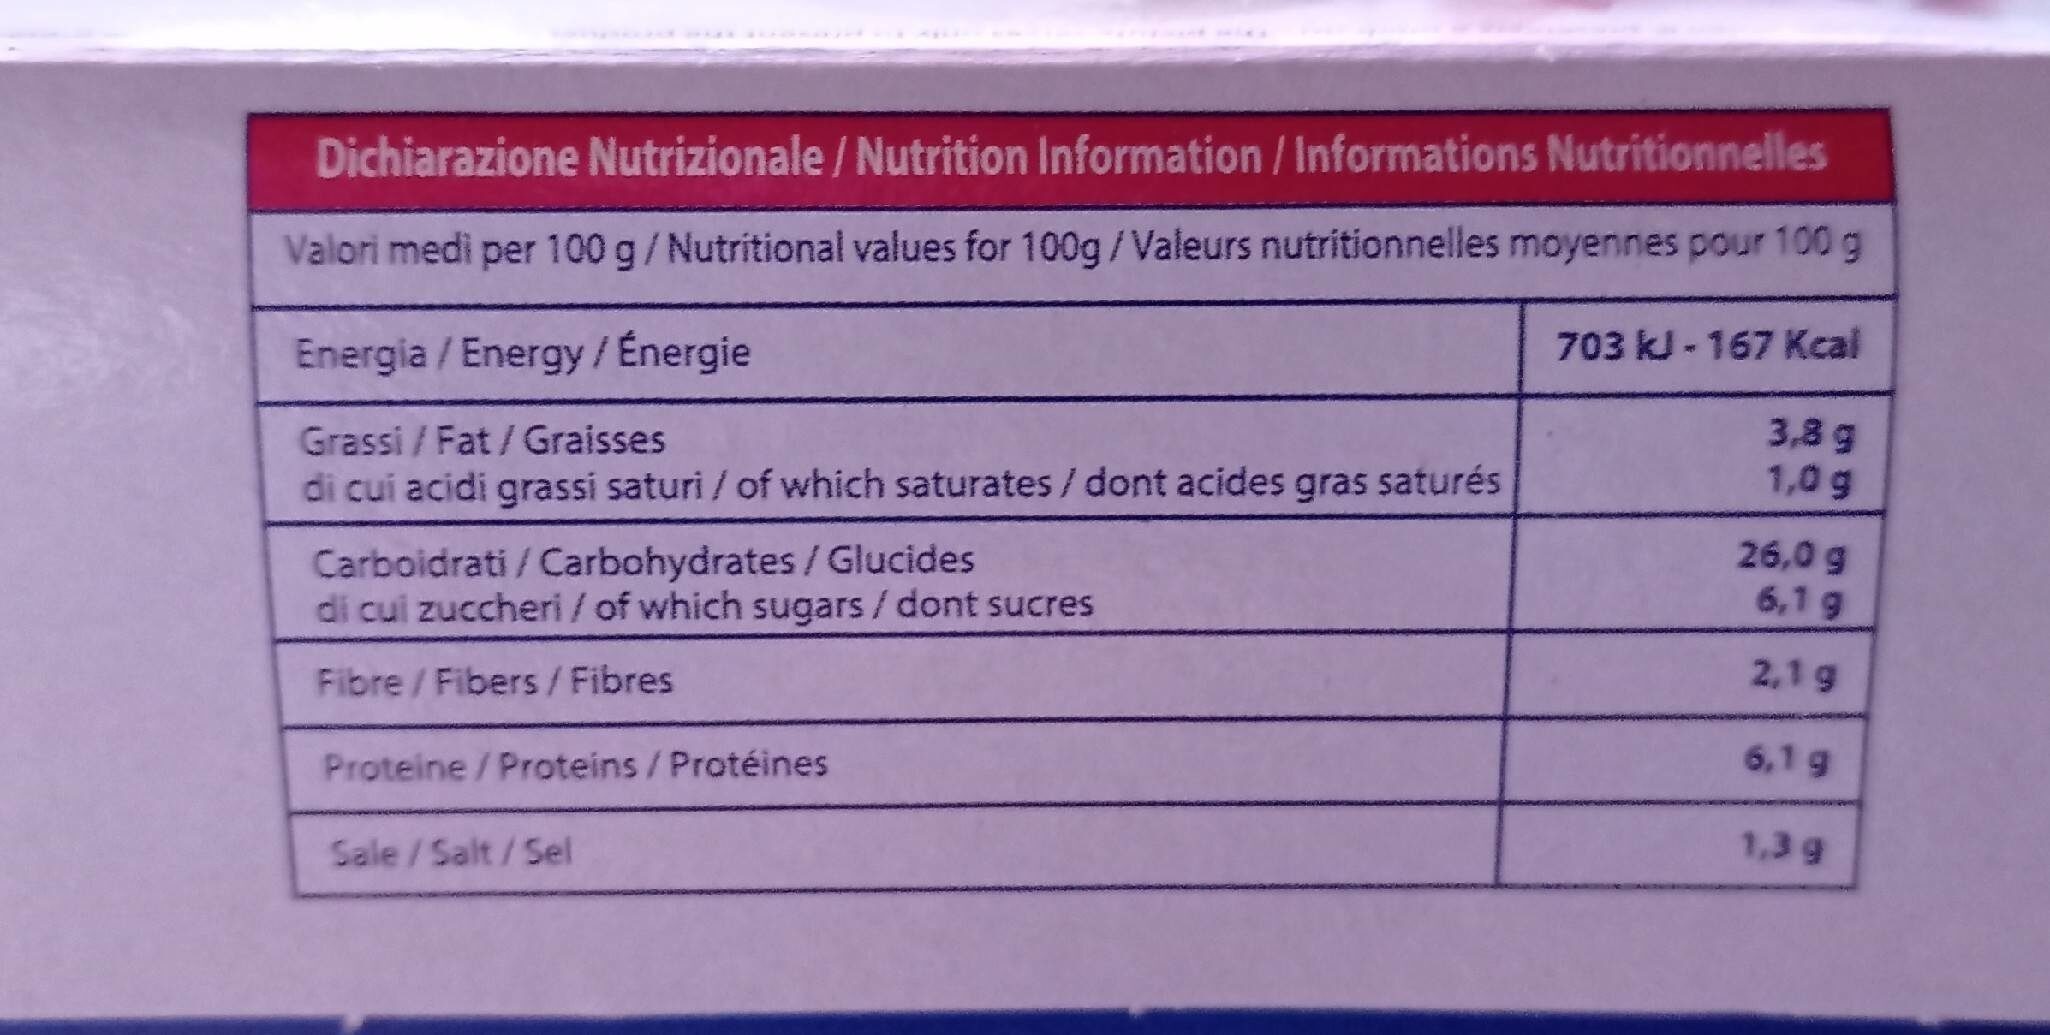 Softicroc - Valori nutrizionali